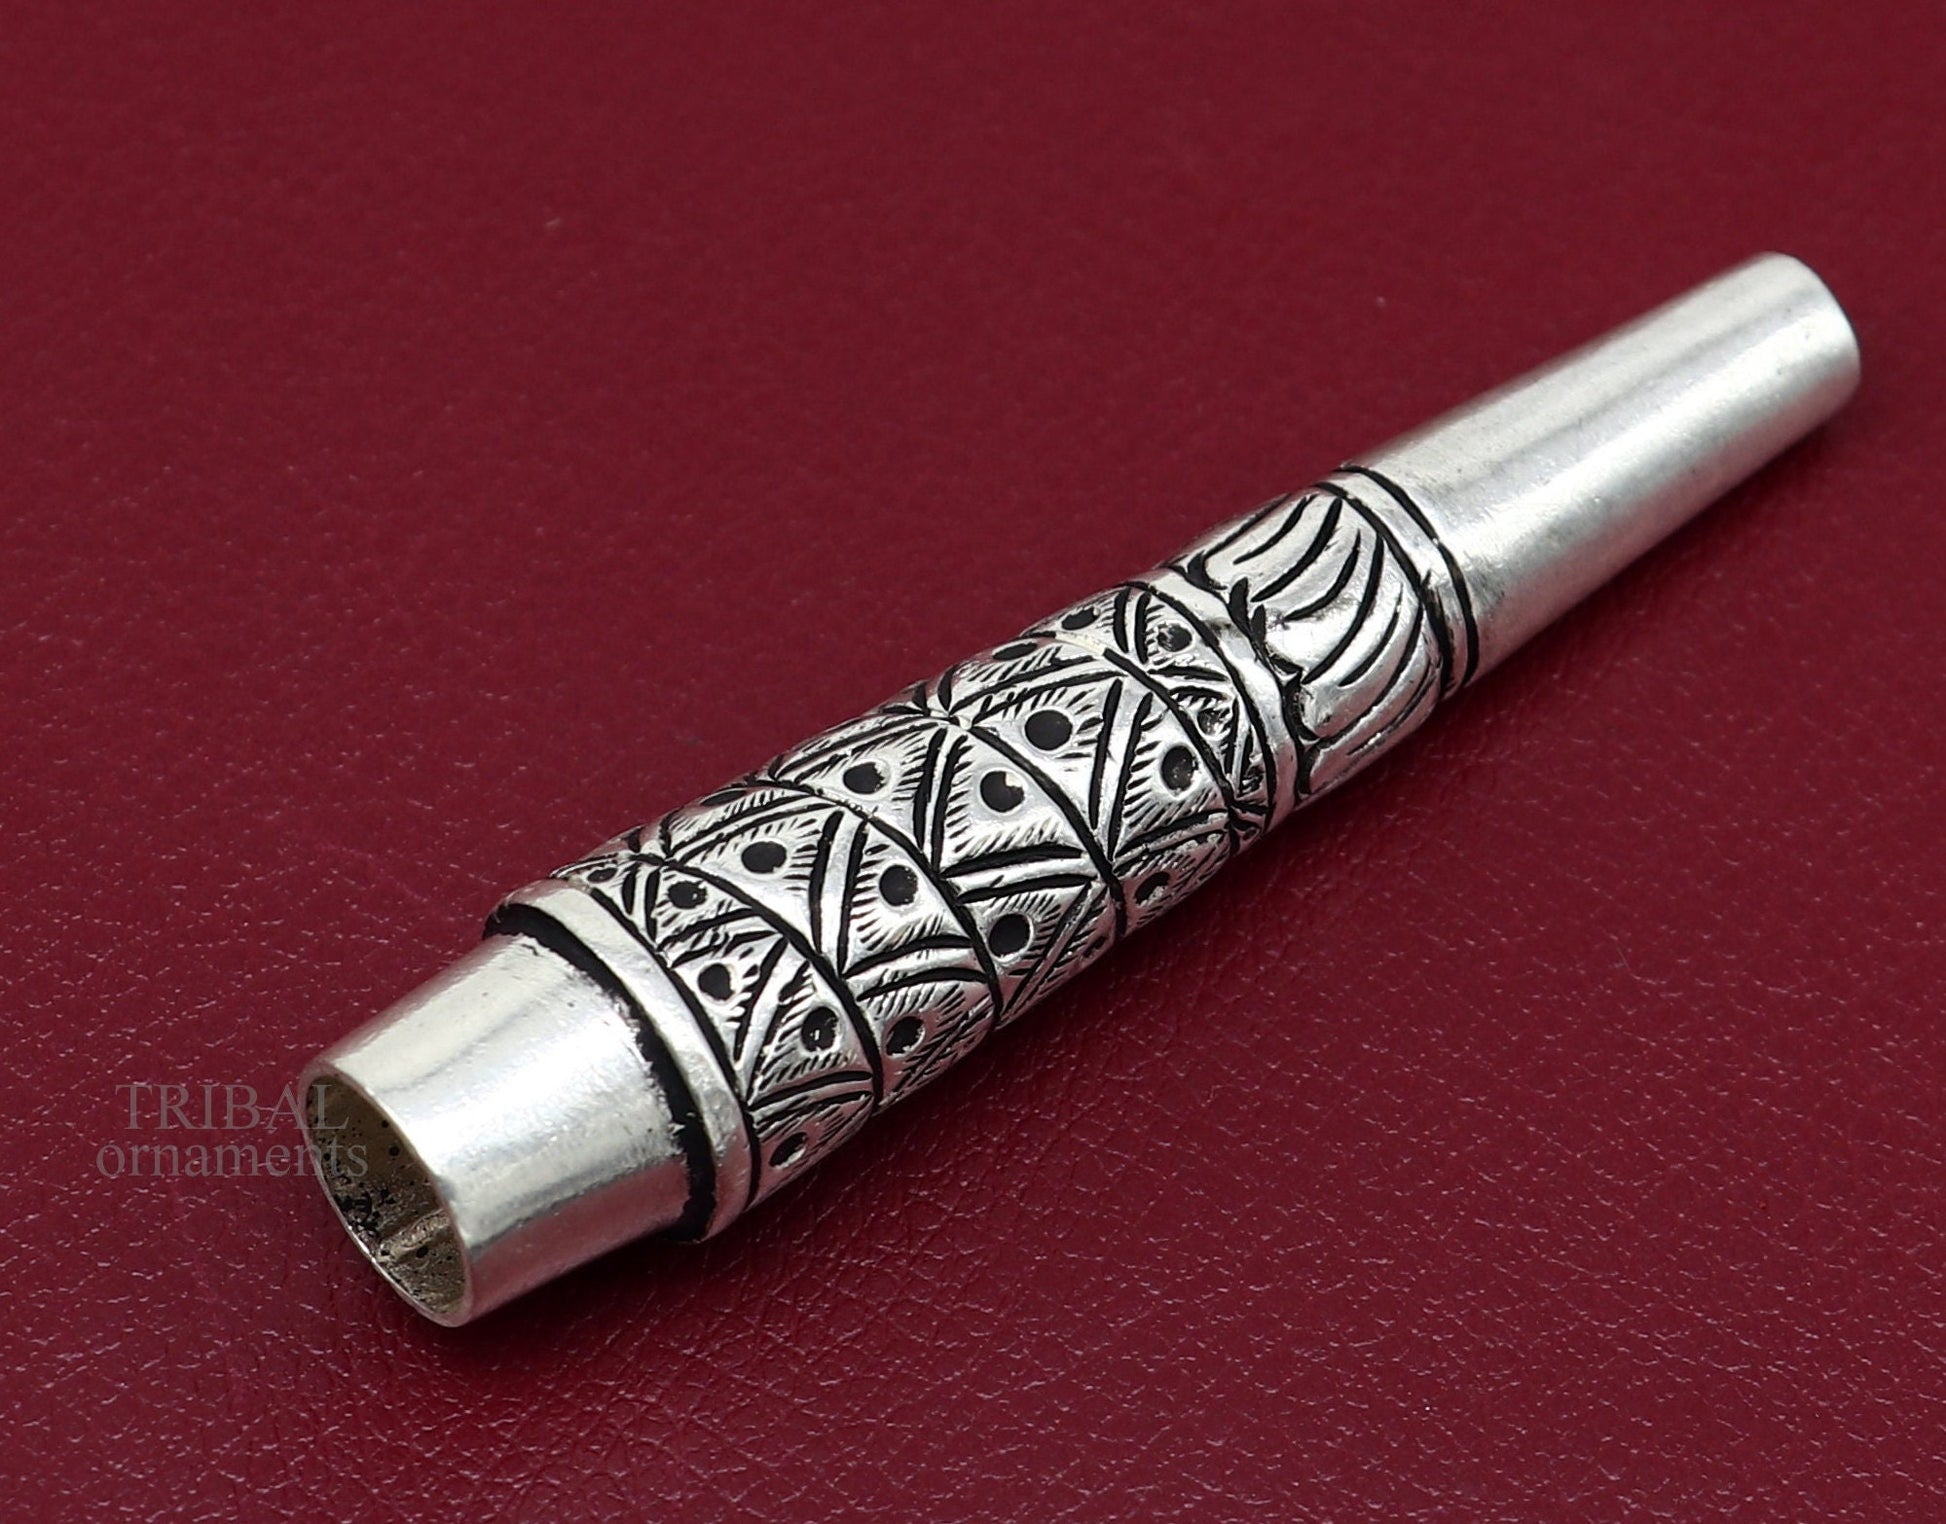 925 sterling silver handmade Nakshi, chitai work hukka/ hookah pipe, royal luxury vintage style hukah, tobacco pipe art477 - TRIBAL ORNAMENTS